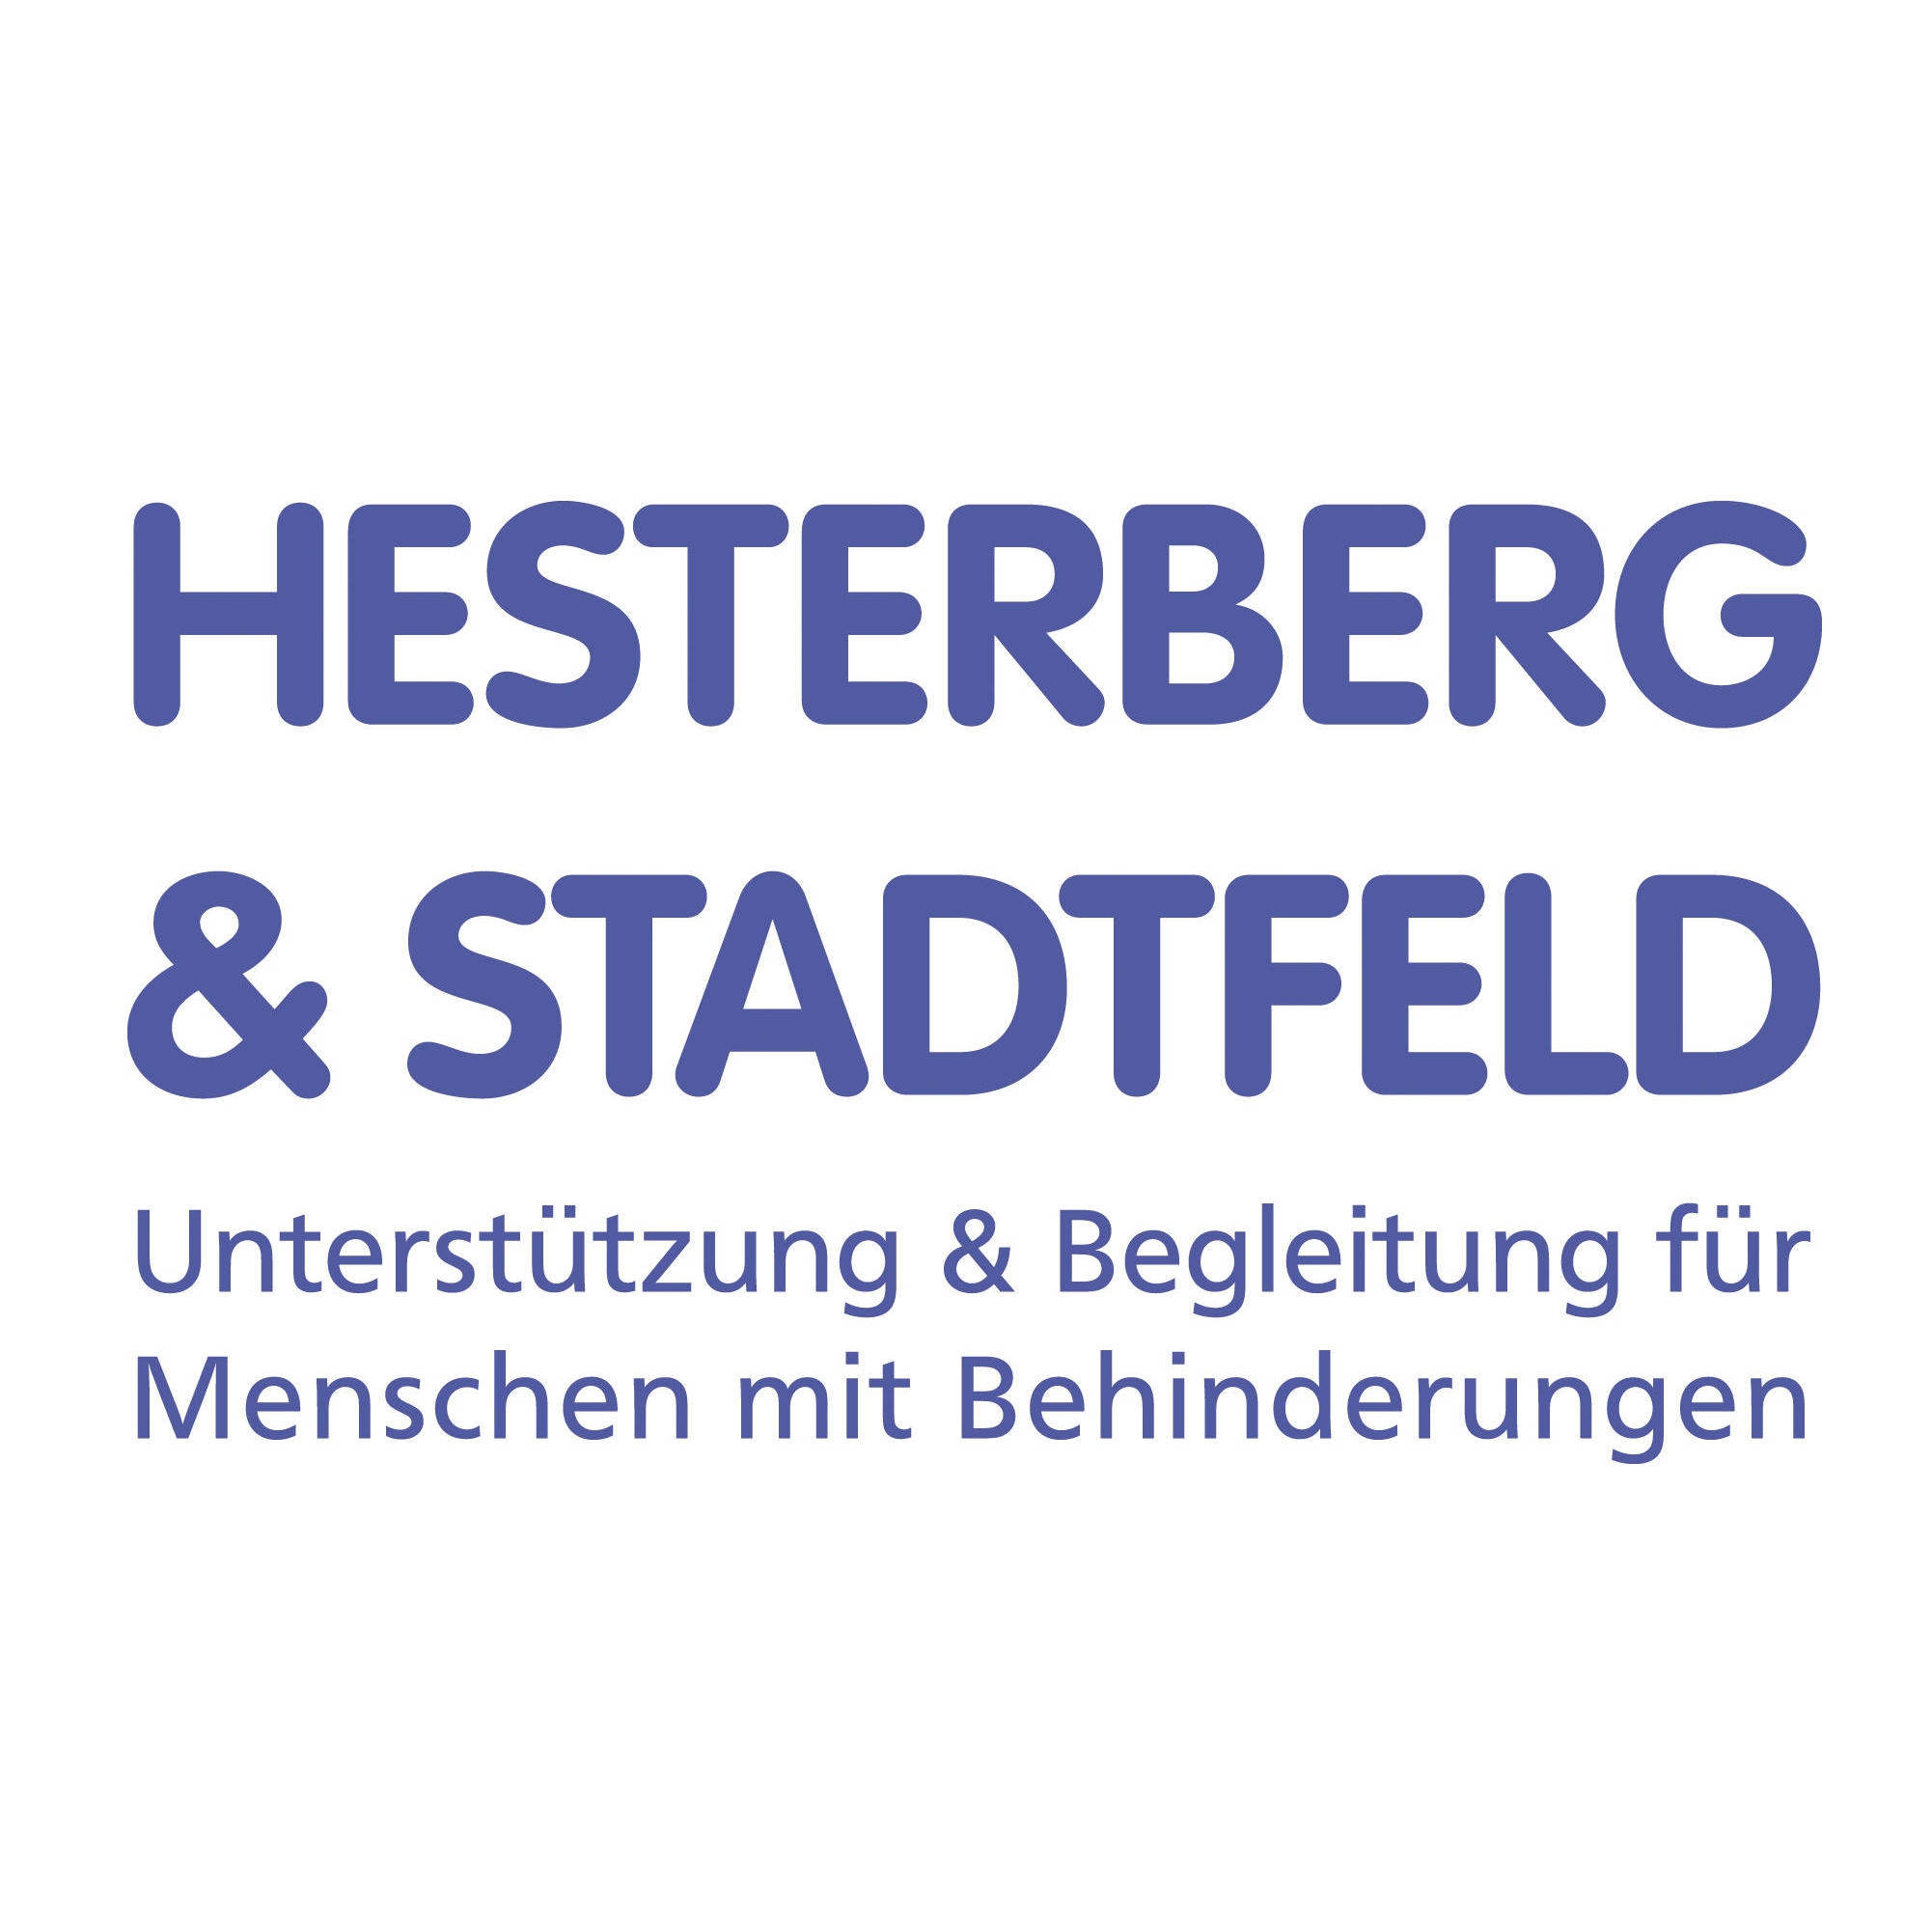 Haus Mara, Eckernförde, Hesterberg & Stadtfeld gGmbH in Eckernförde - Logo